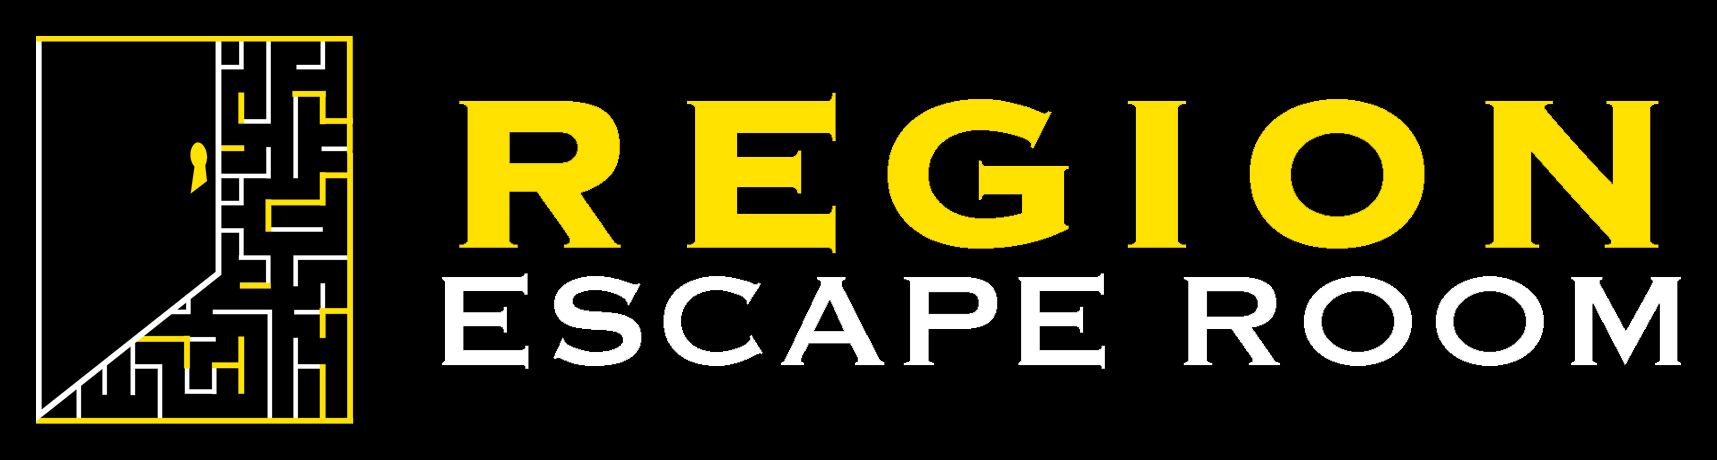 Region Escape Room